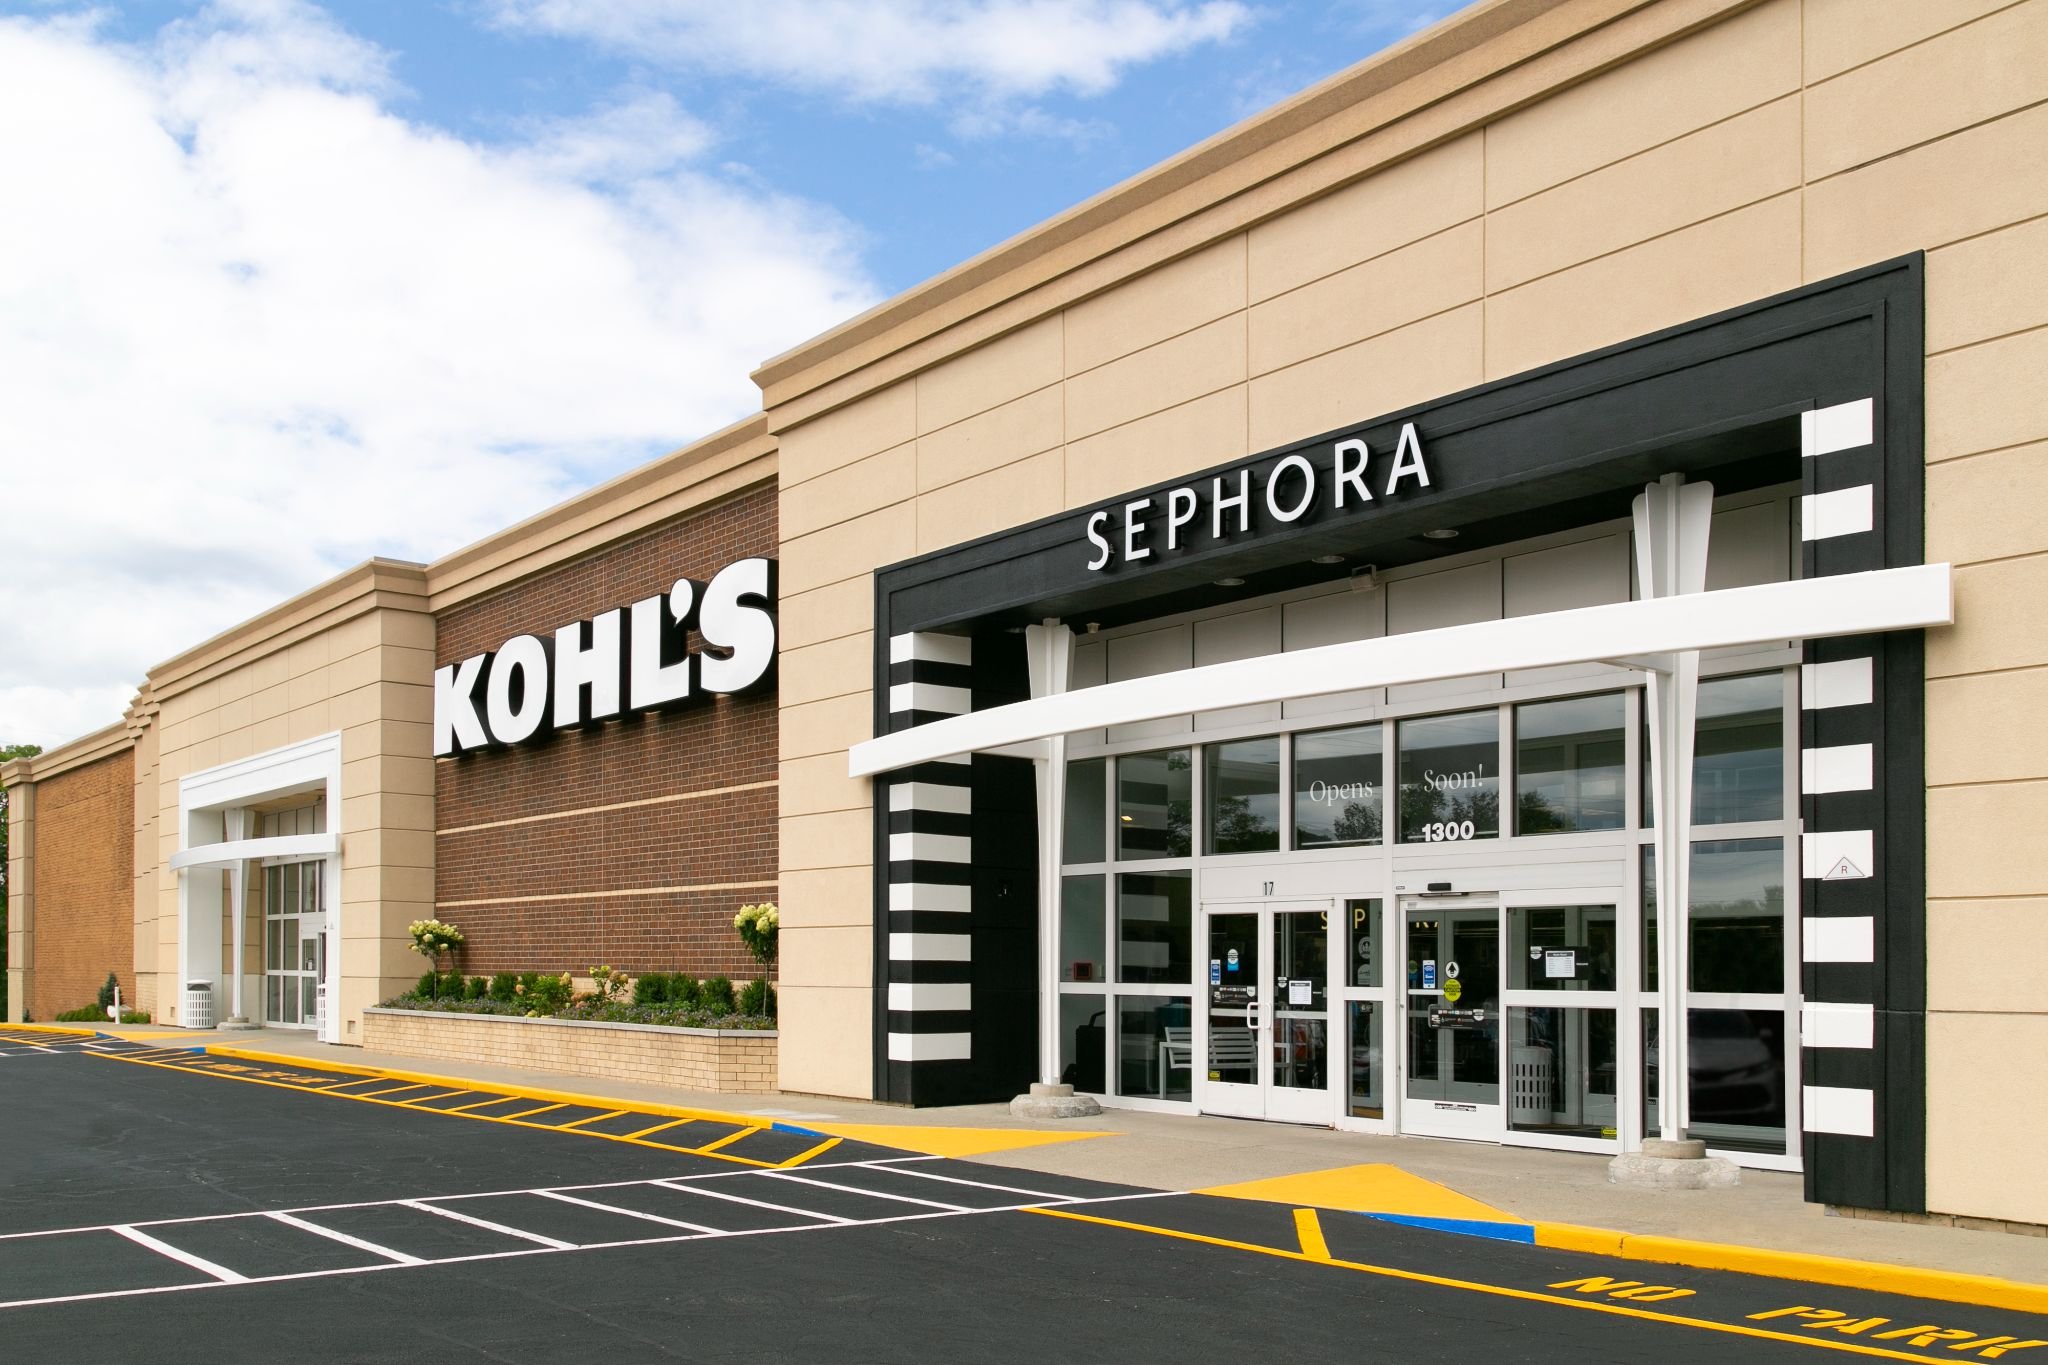 Kohl's says it's no longer a department store